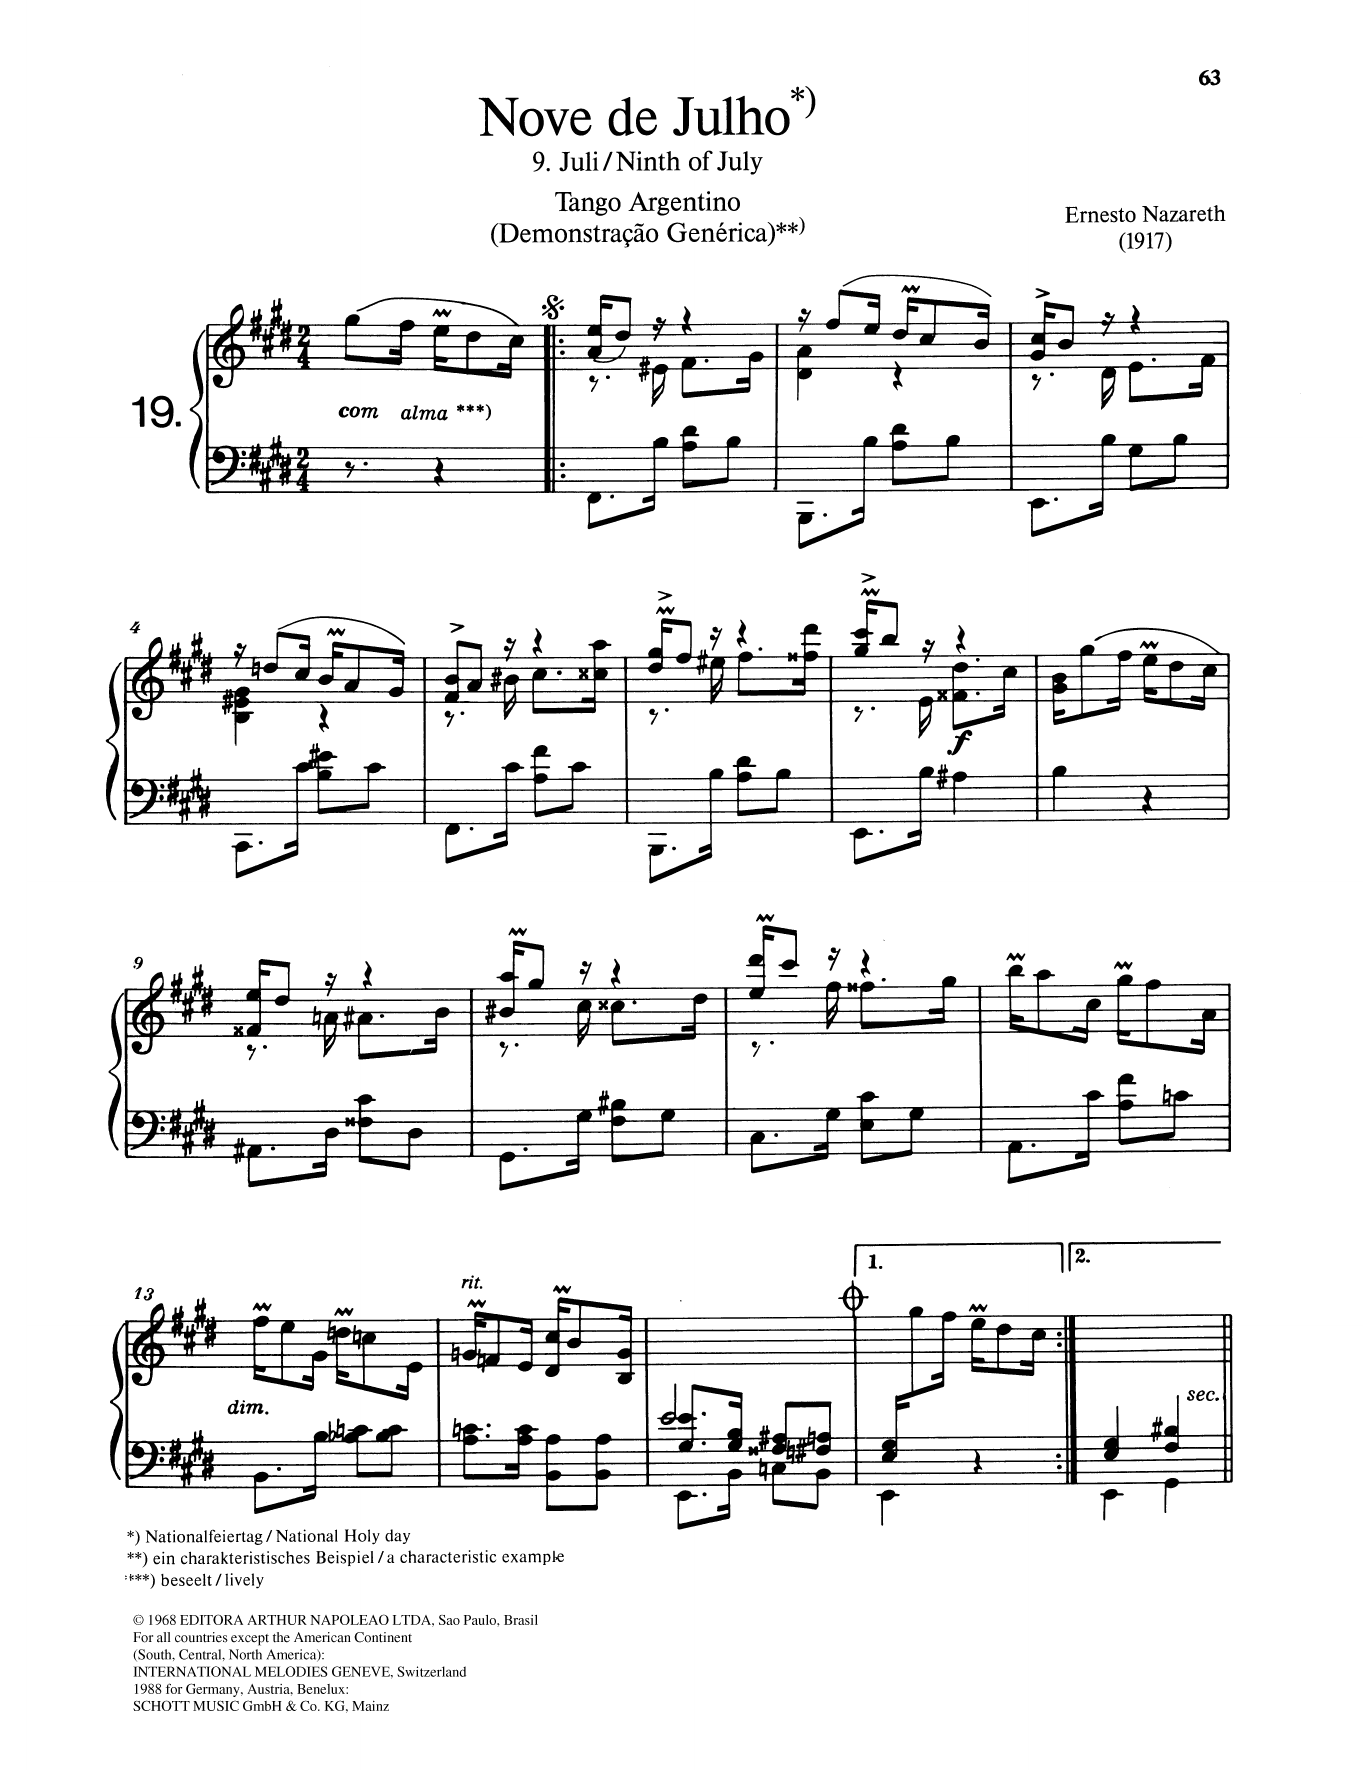 Ernesto Nazareth Nove de Julho Sheet Music Notes & Chords for Piano Solo - Download or Print PDF